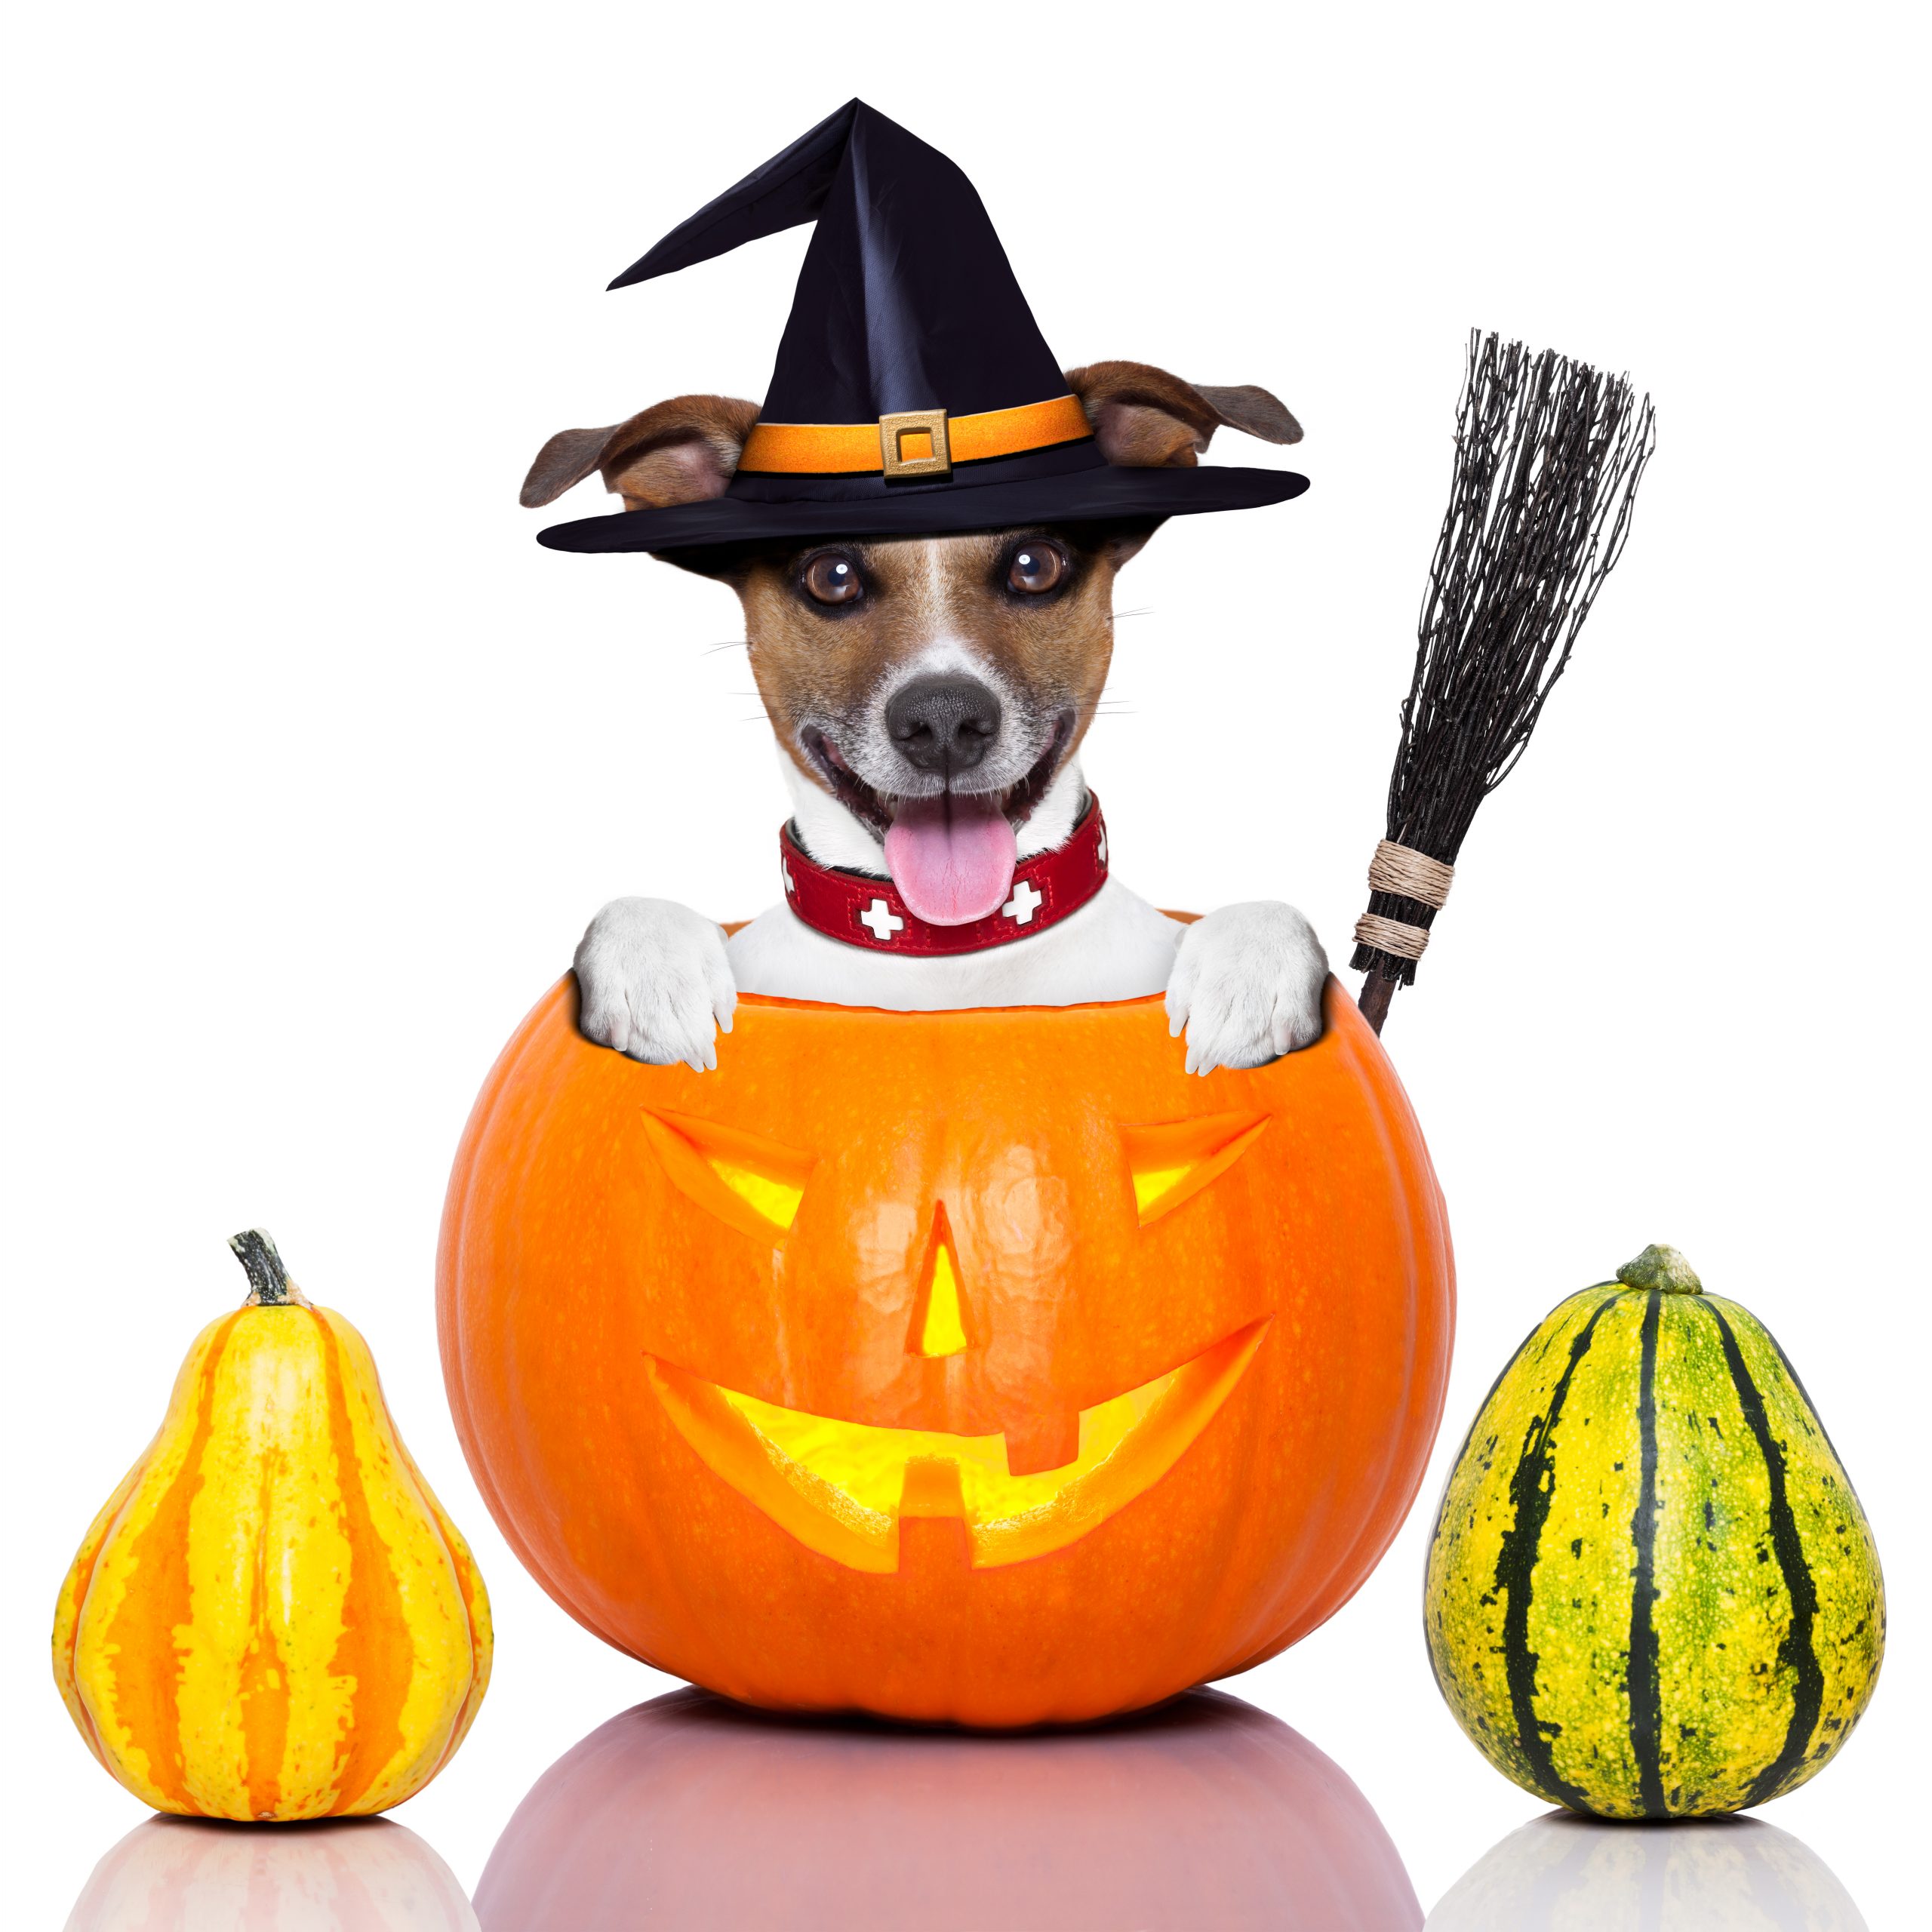 https://depositphotos.com/32519893/stock-photo-halloween-dog-as-witch.html